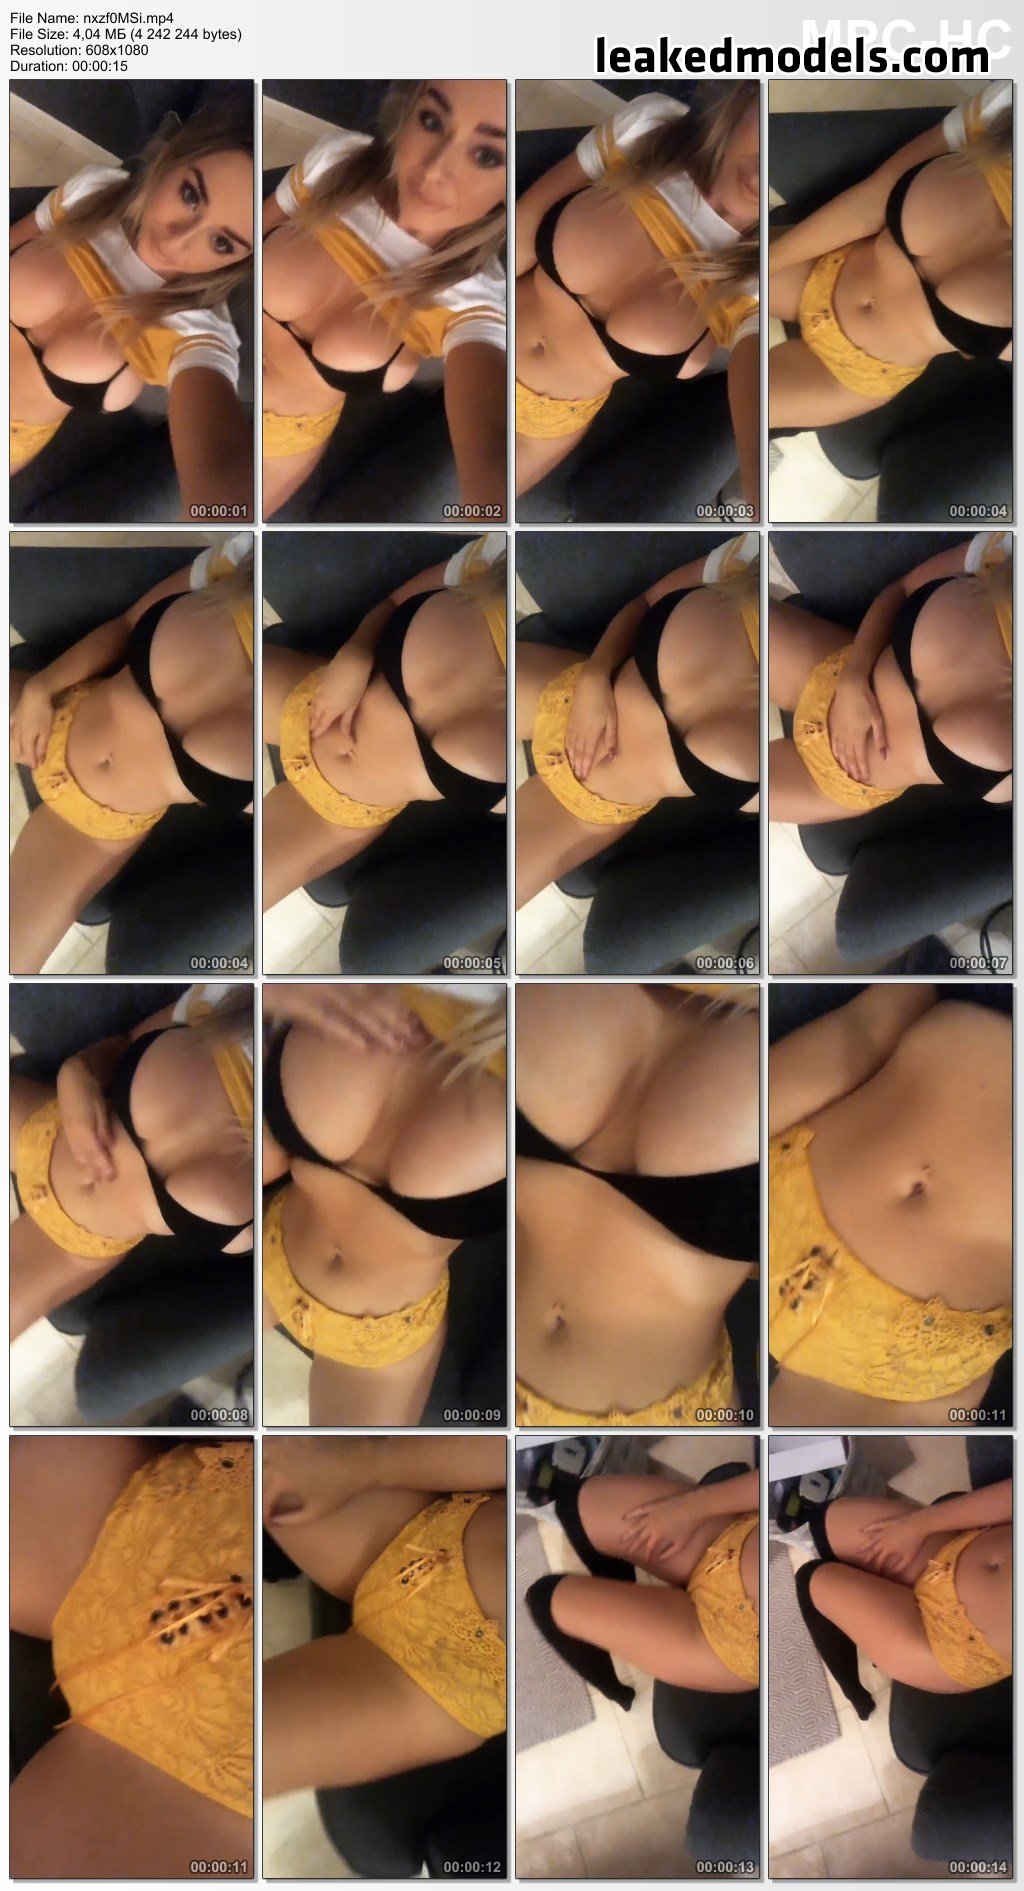 melissa debling leaked nude leakedmodels.com 0020 - Melissa Debling Instagram Nude Leaks (27 Photos)